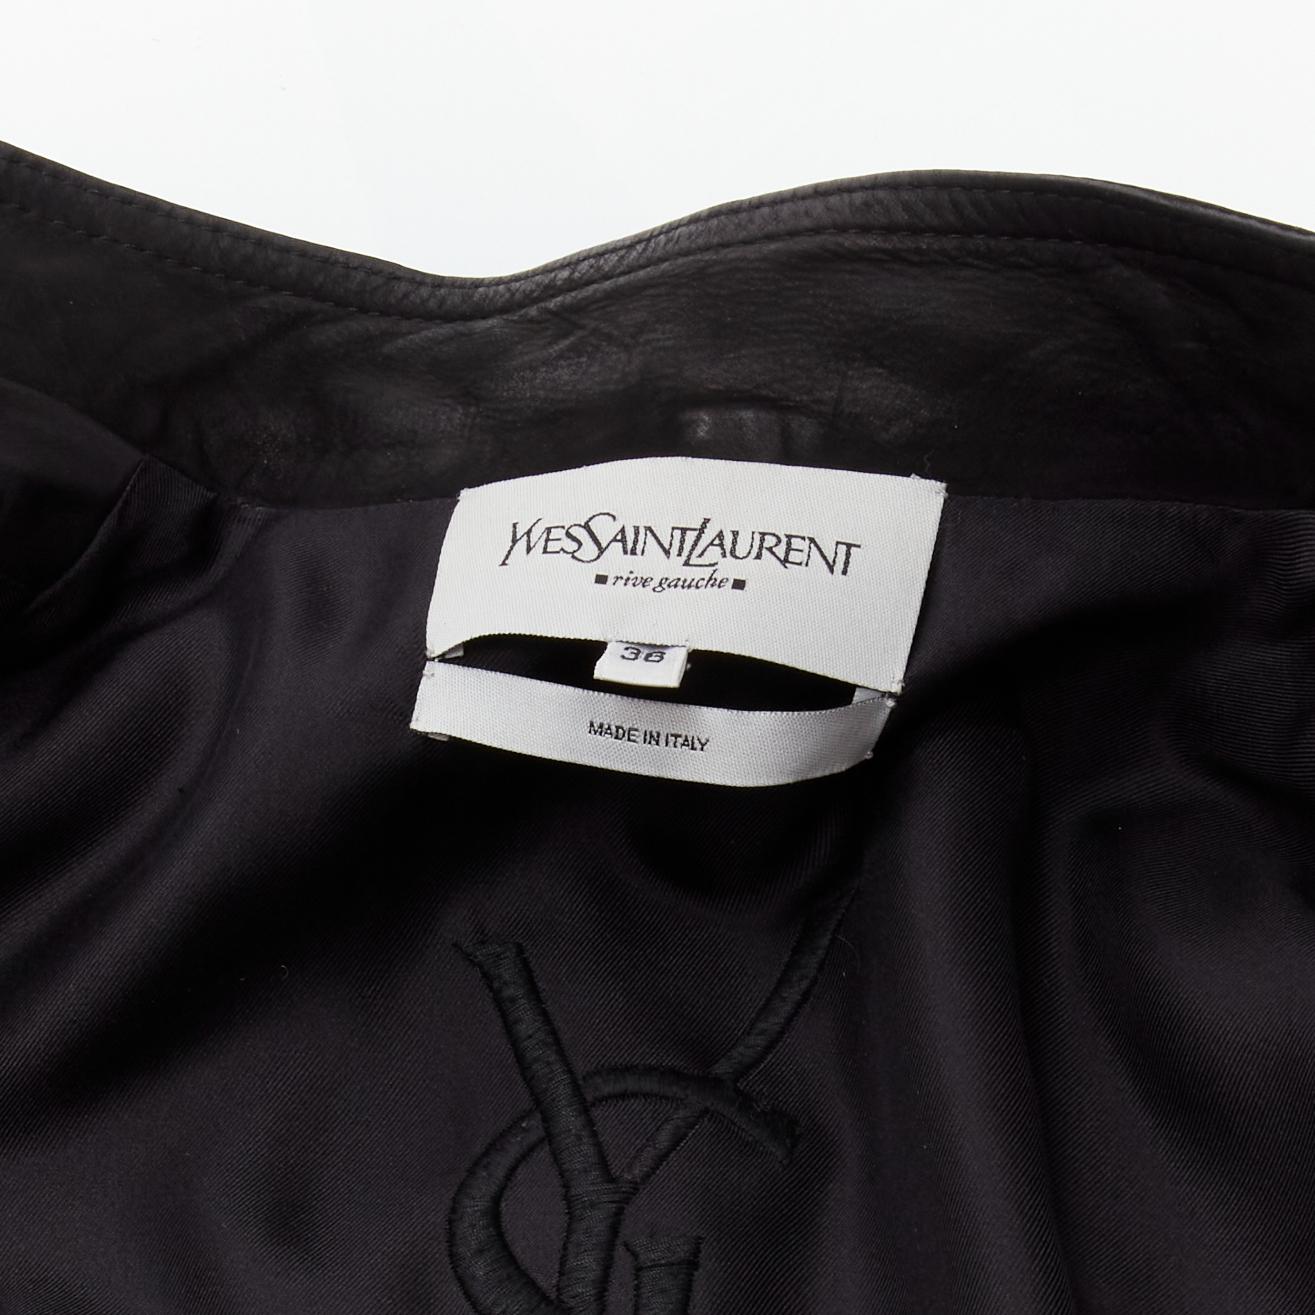 YVES SAINT LAURENT Vintage Stefano Pilati leather ruffle fitted jacket FR36 S 8